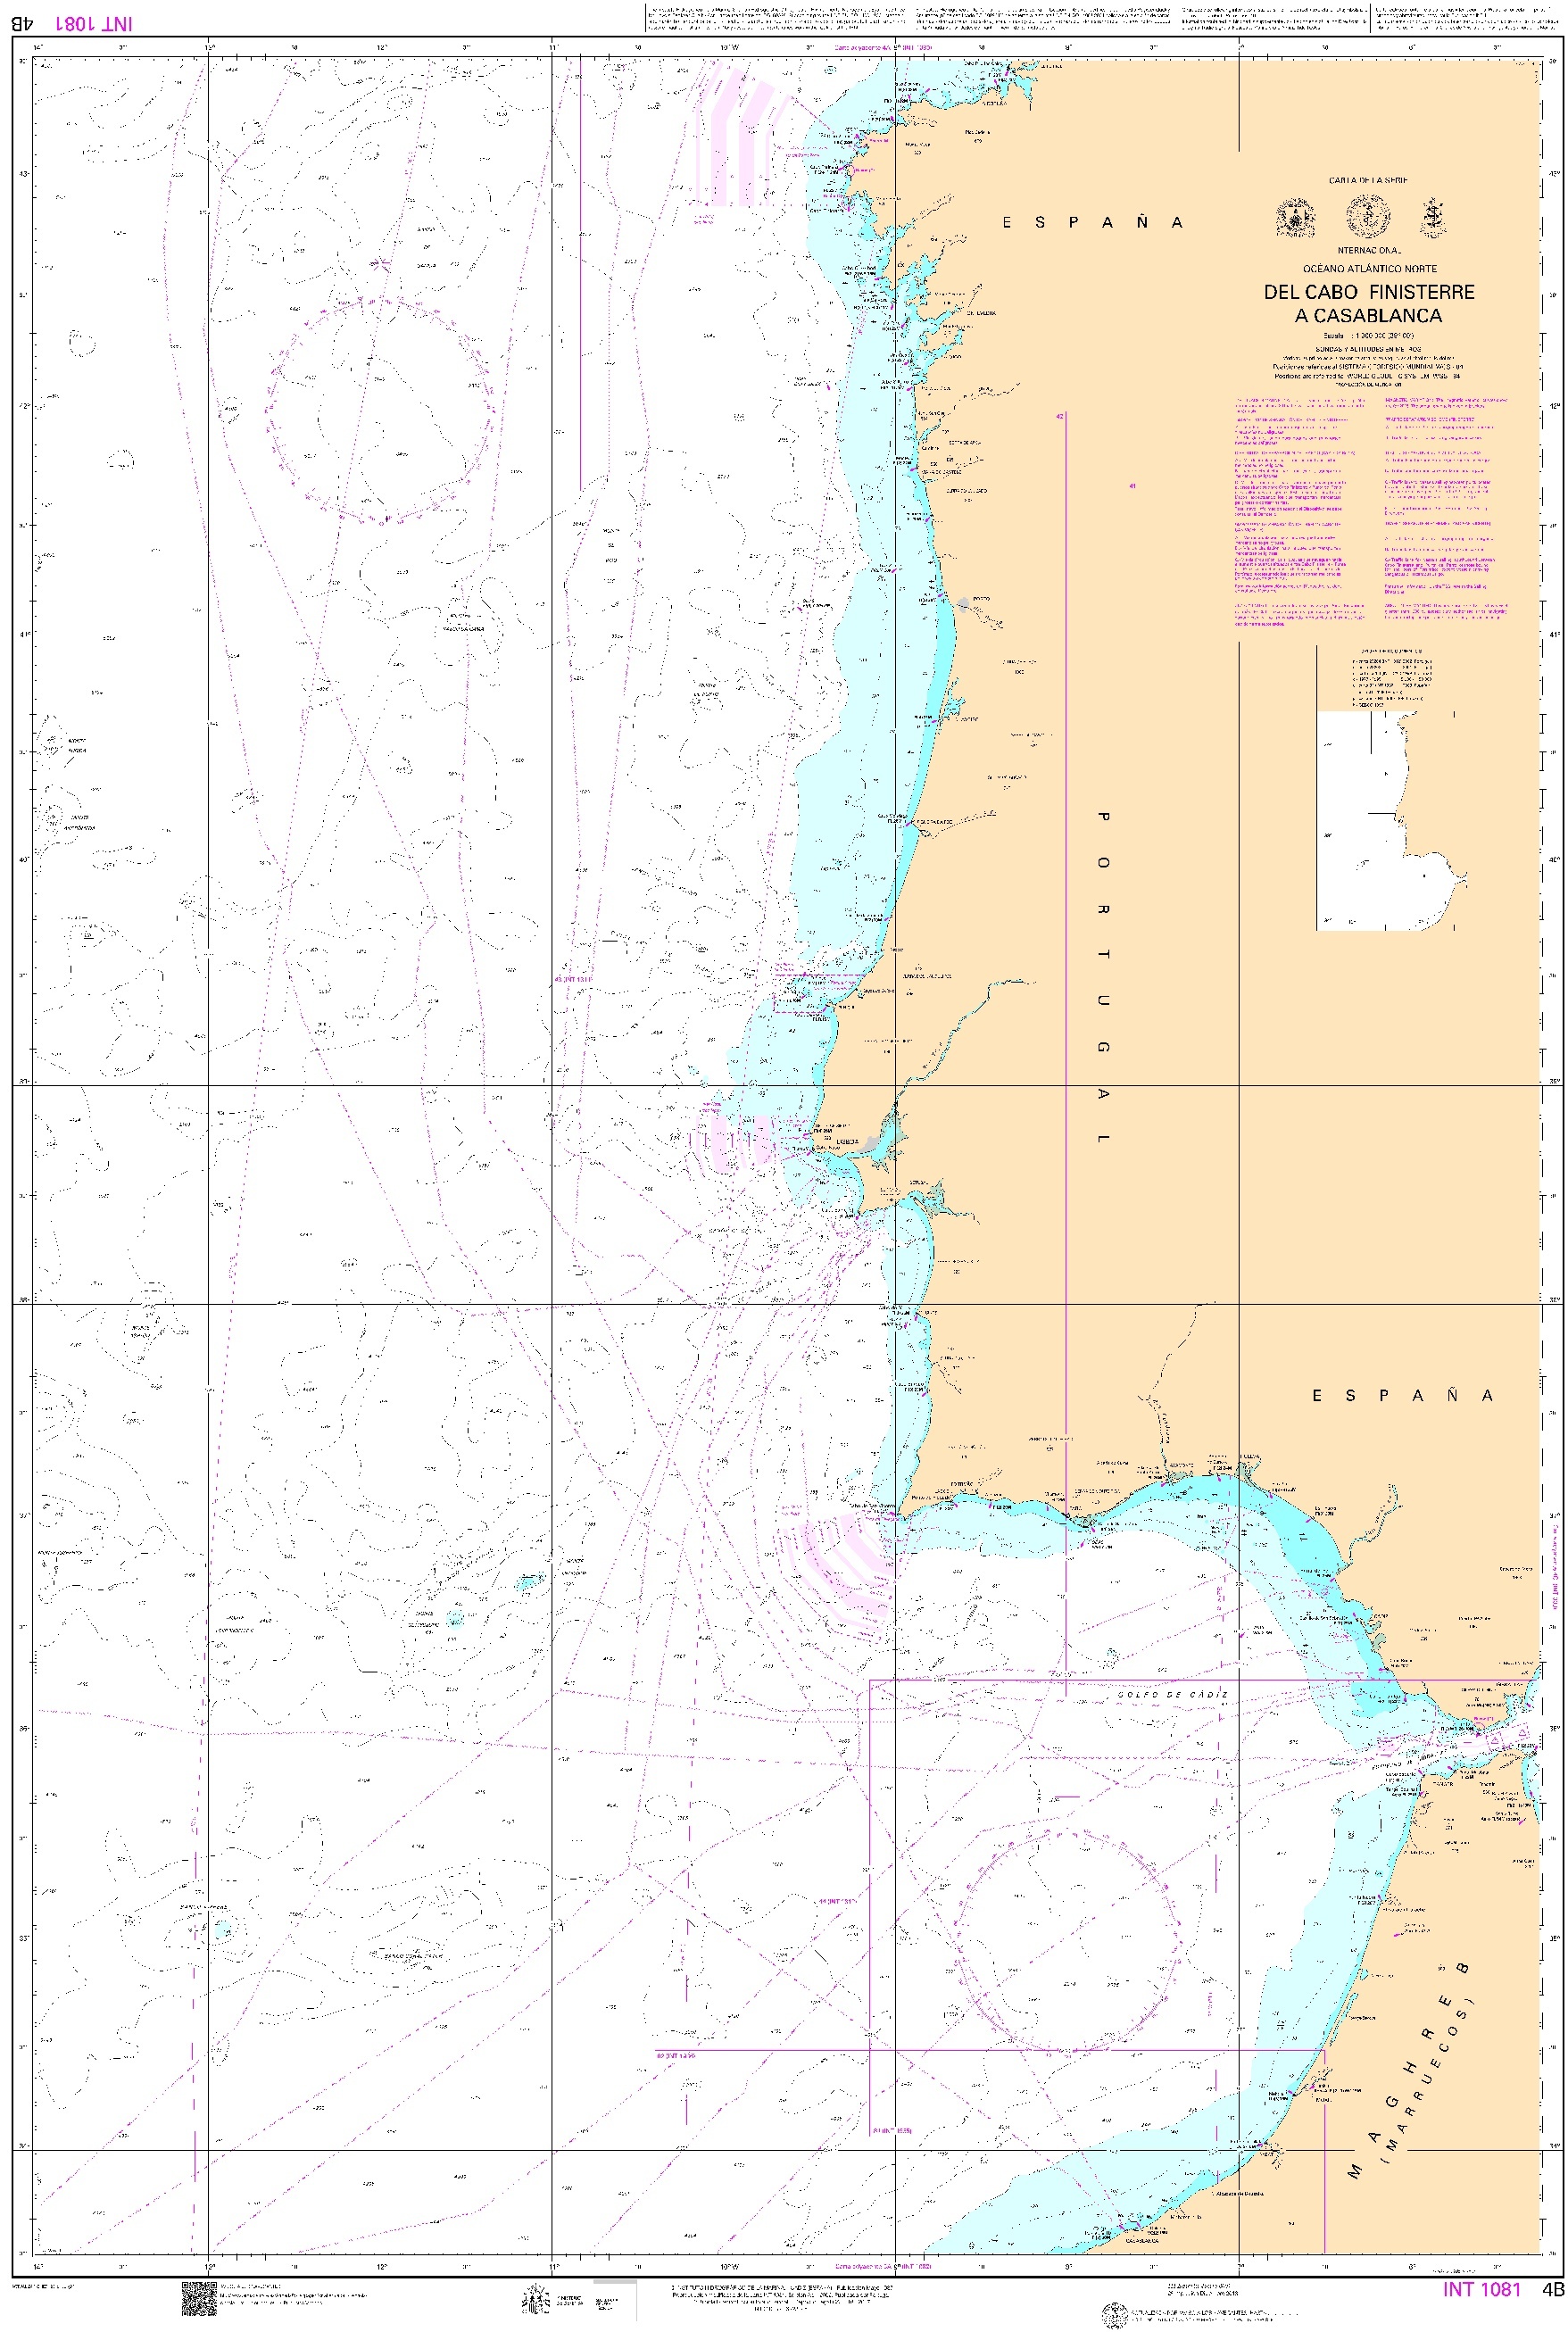 4A Golfo de Vizcaya. De Brest al cabo Finisterre "INT 1080. 1:10000000. 1:10000000"